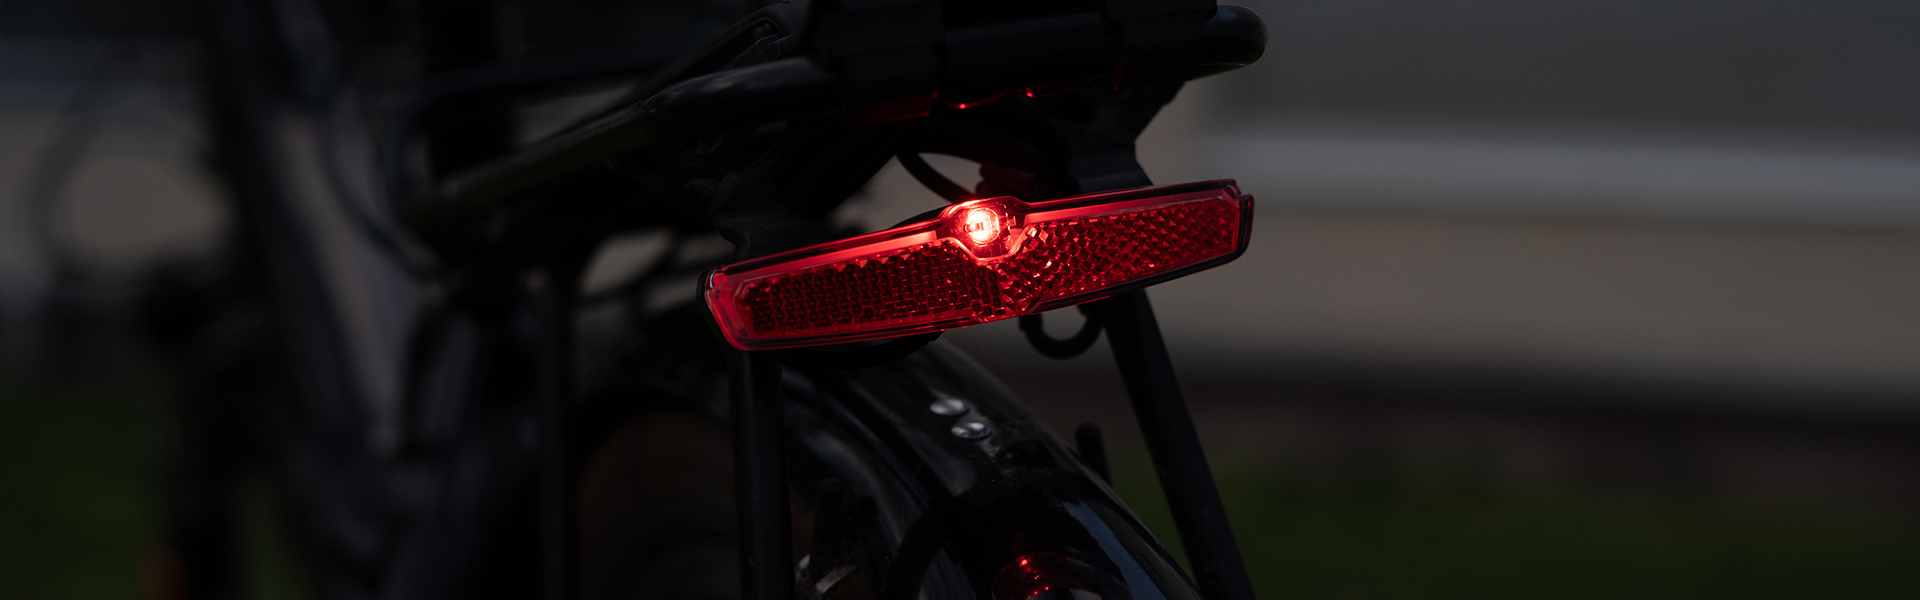 Sate-lite 500lumen USB rechargeable bike light eletric bike front light CREE LED waterproof